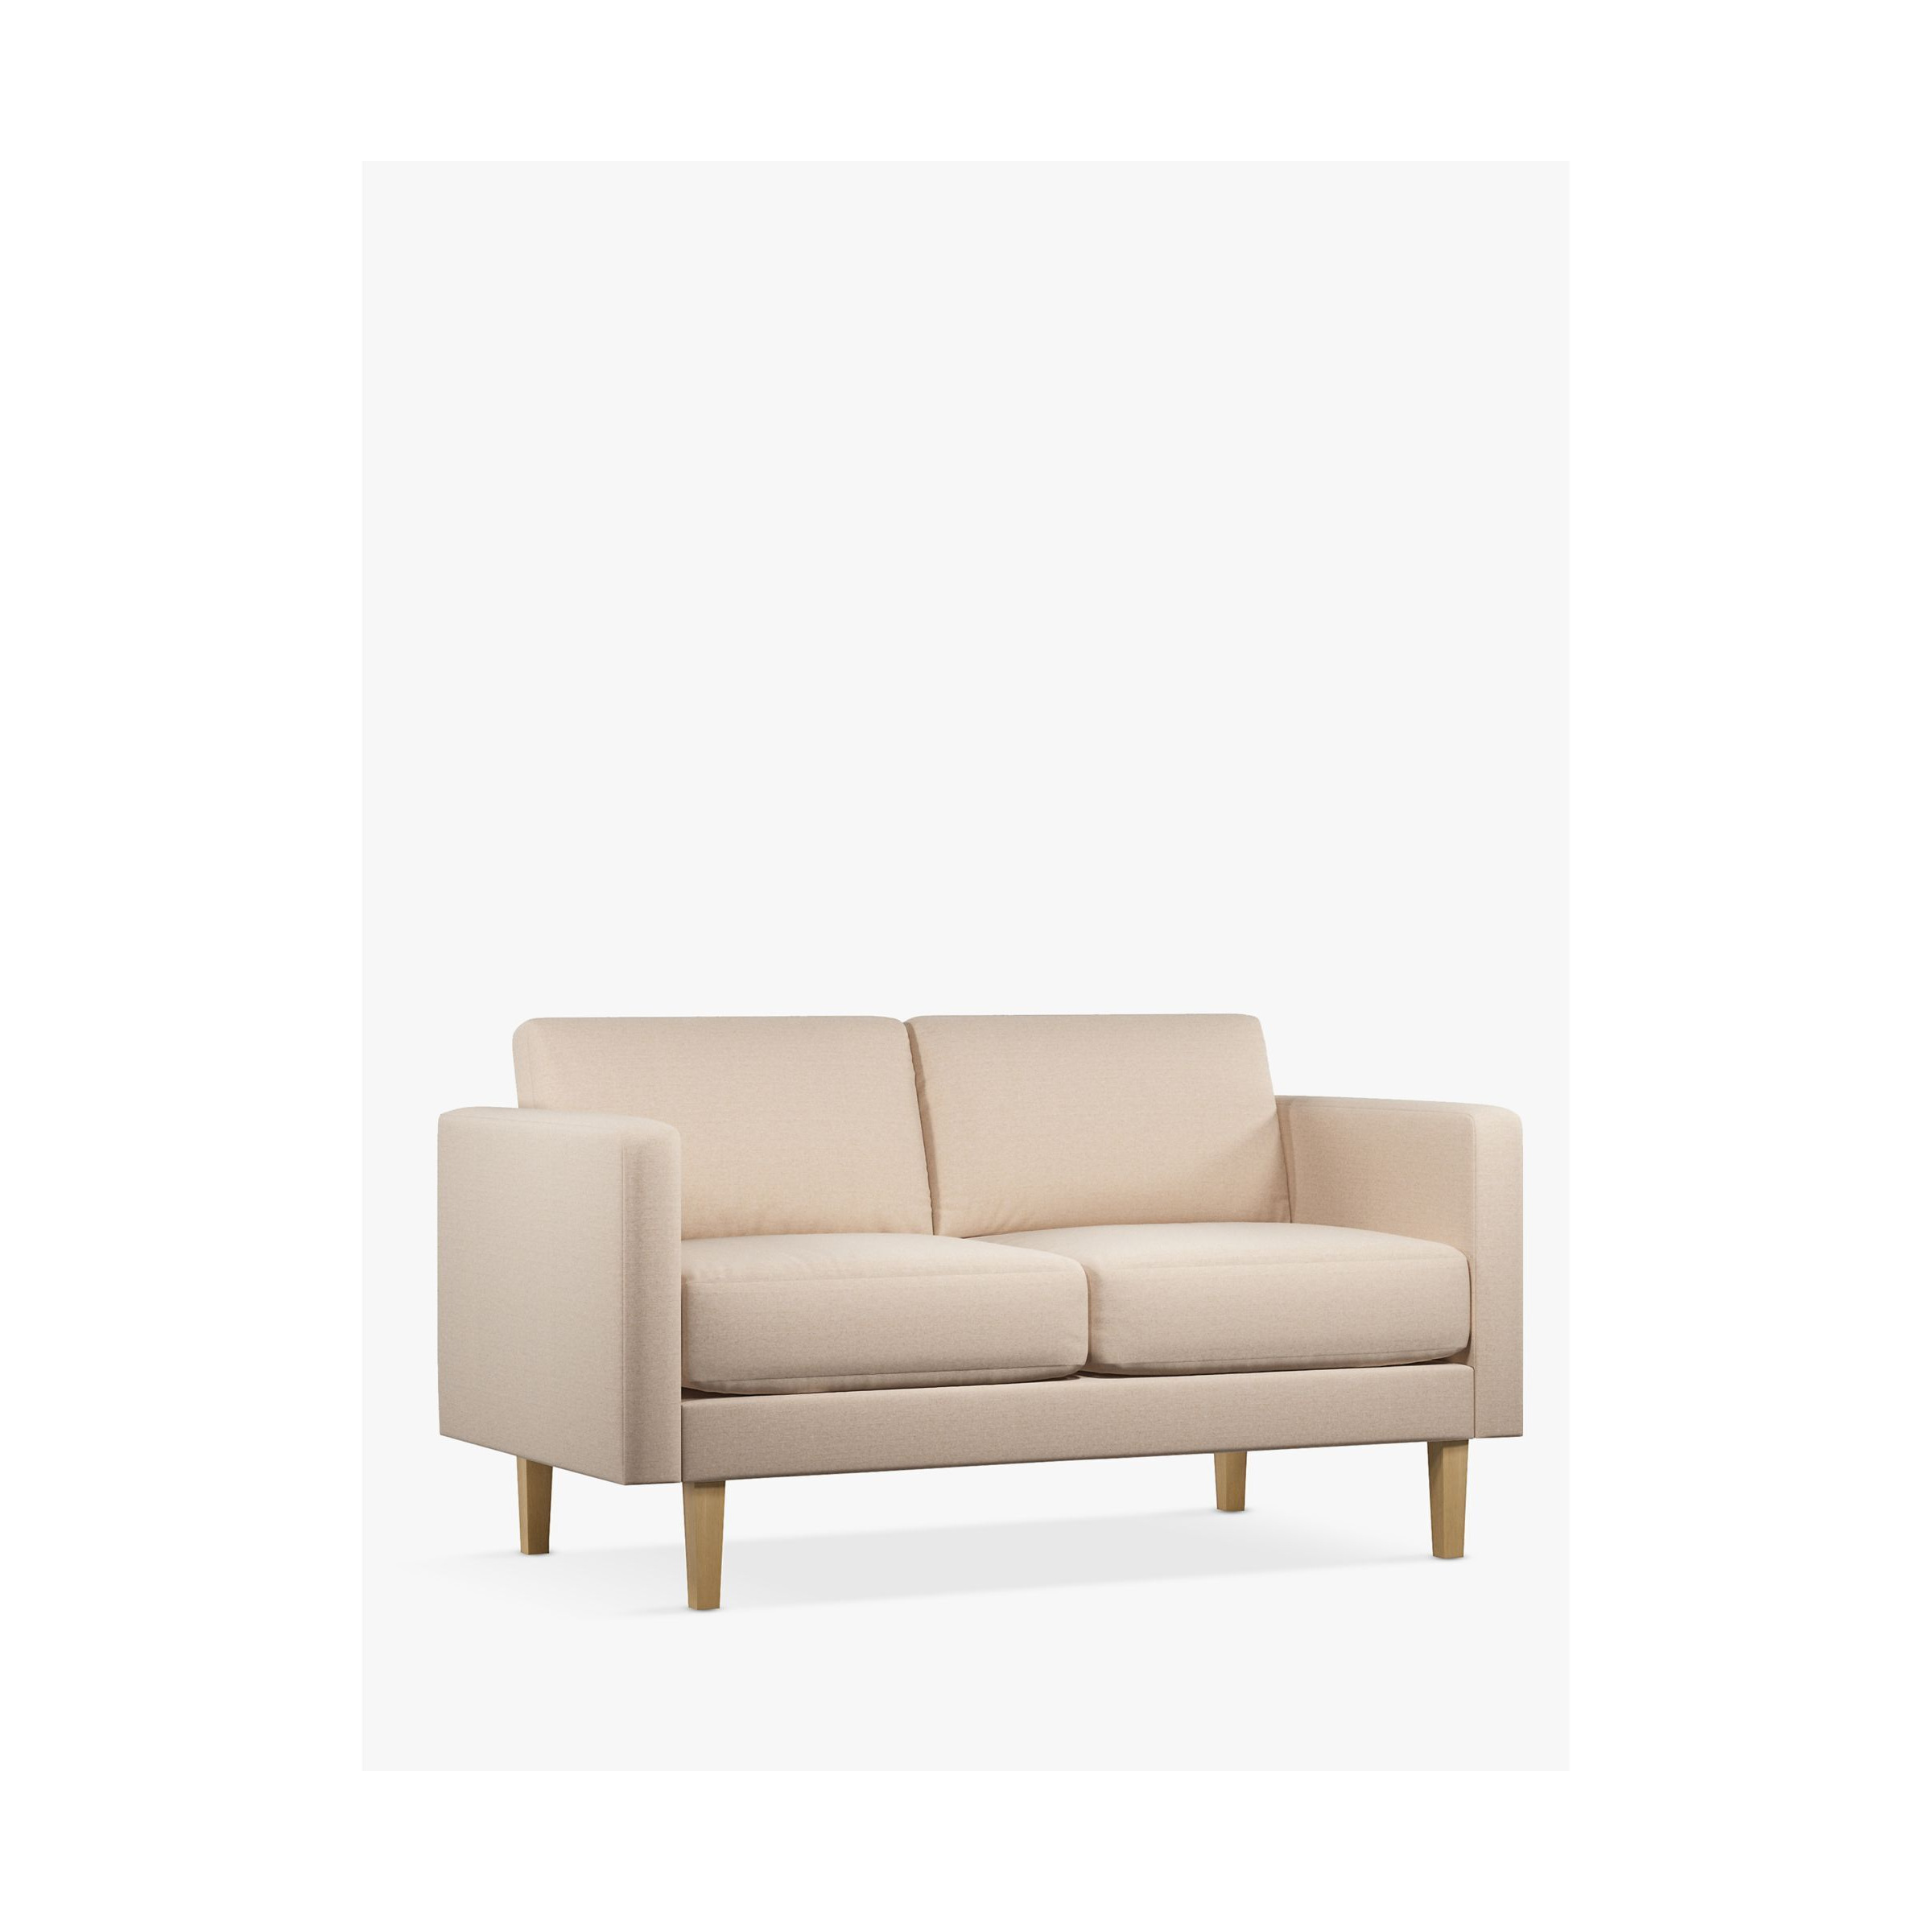 John Lewis ANYDAY Eavis Medium 2 Seater Sofa, Light Leg, Brushed Tweed Beige - image 1